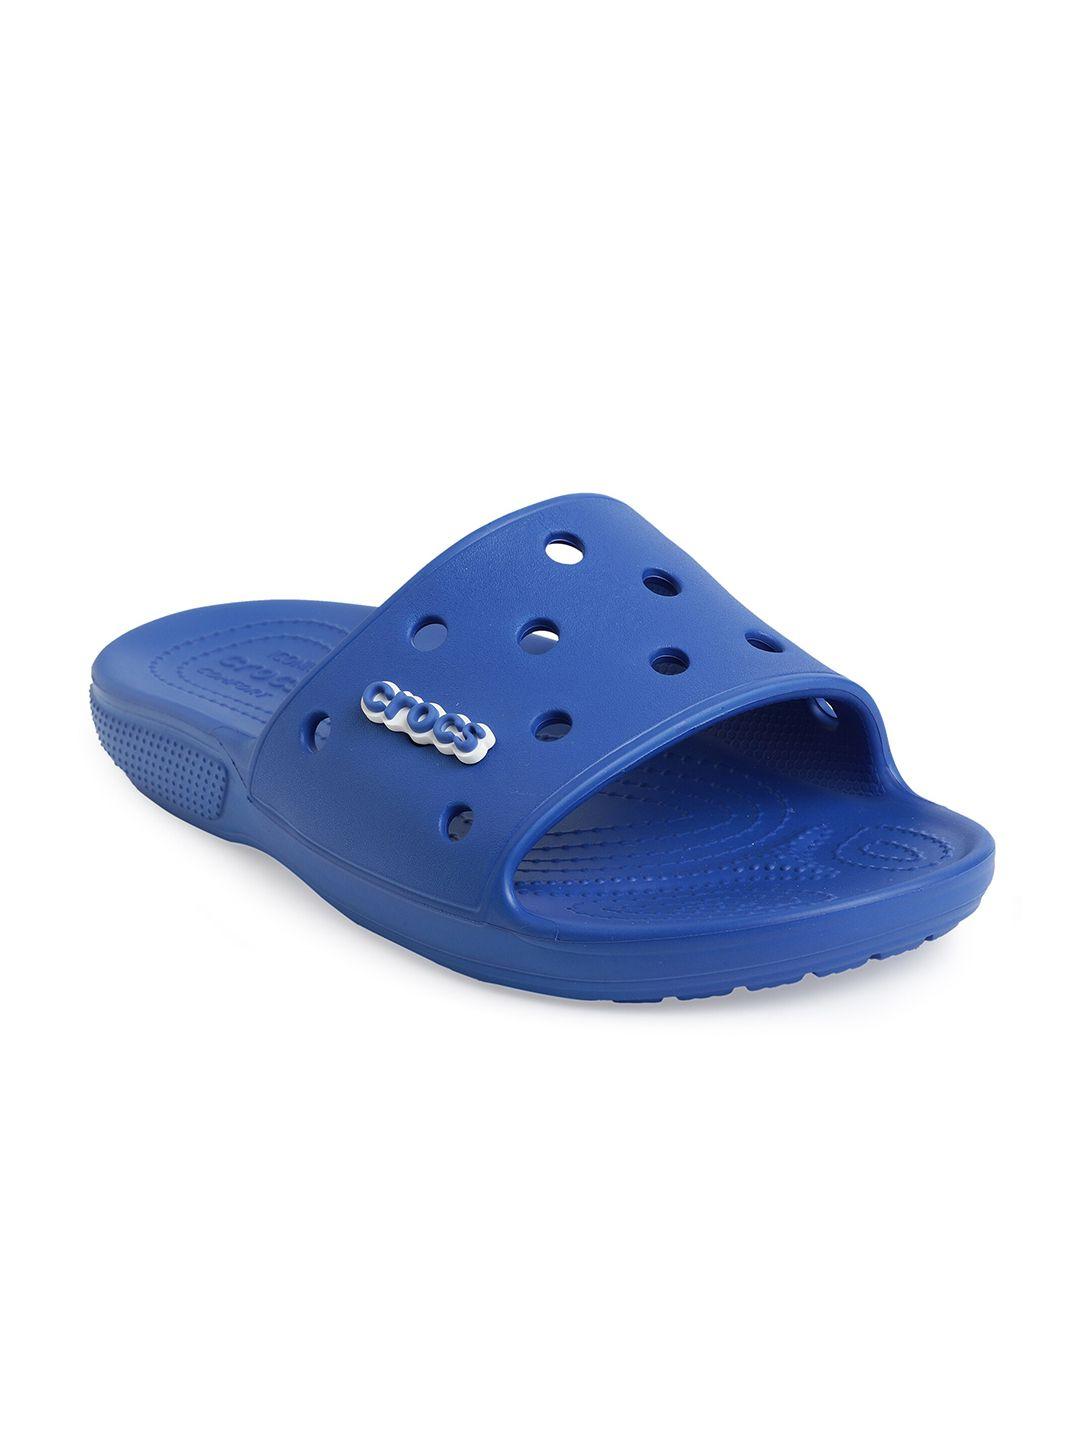 crocs blue croslite sliders